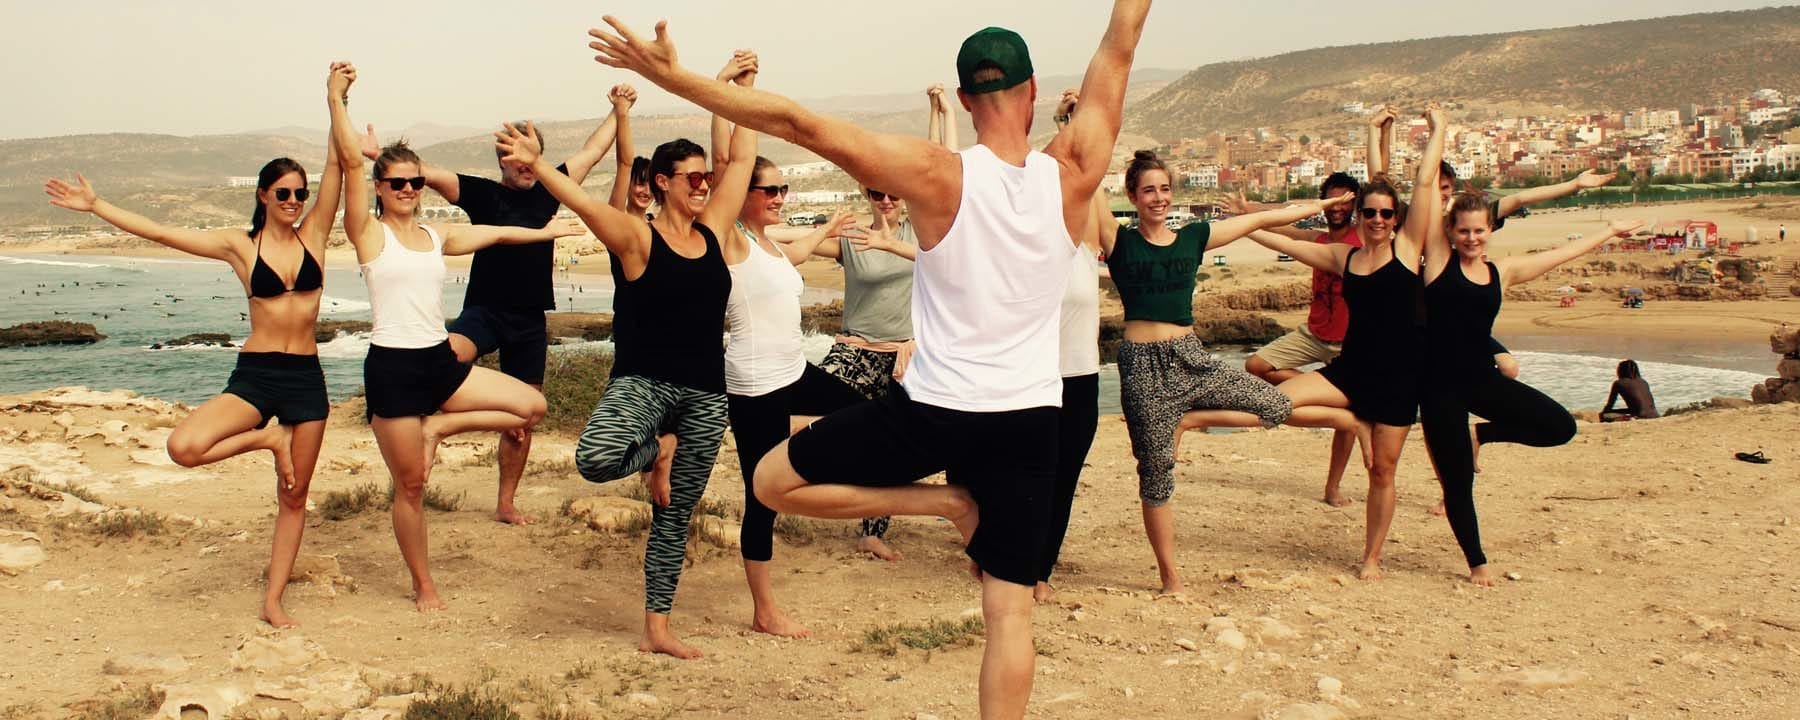 Yoga Surf Retreats Morocco_Source NOSADE